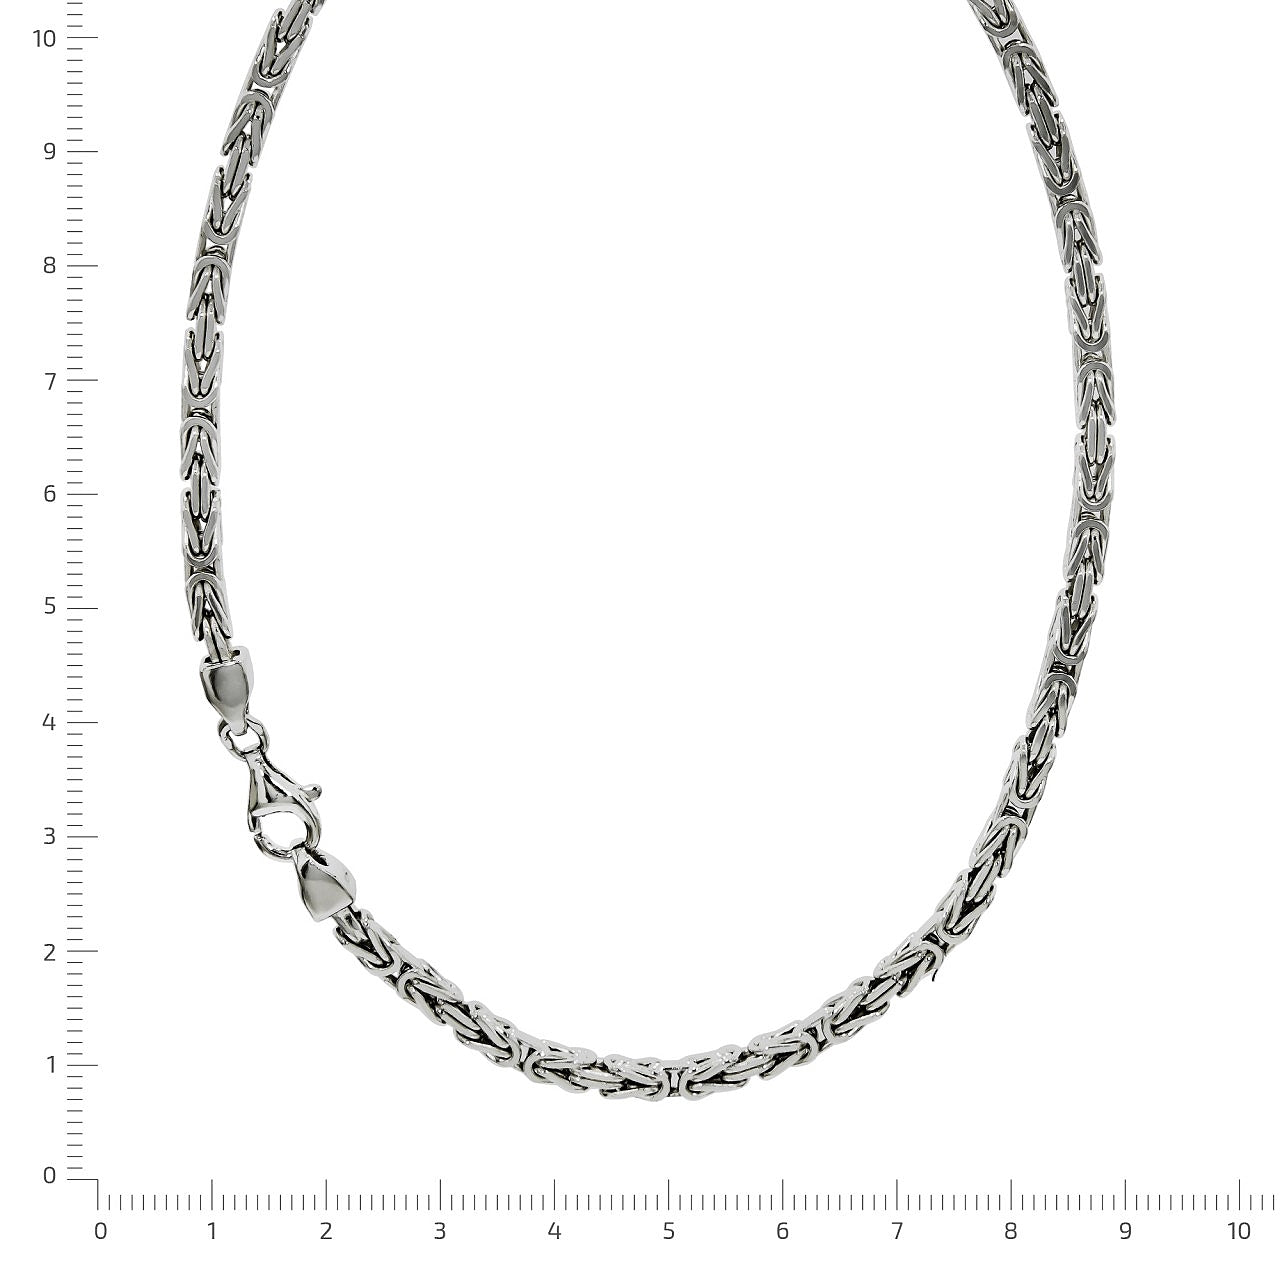 Unisex Collier Sterlingsilber Königskette 45-65cm